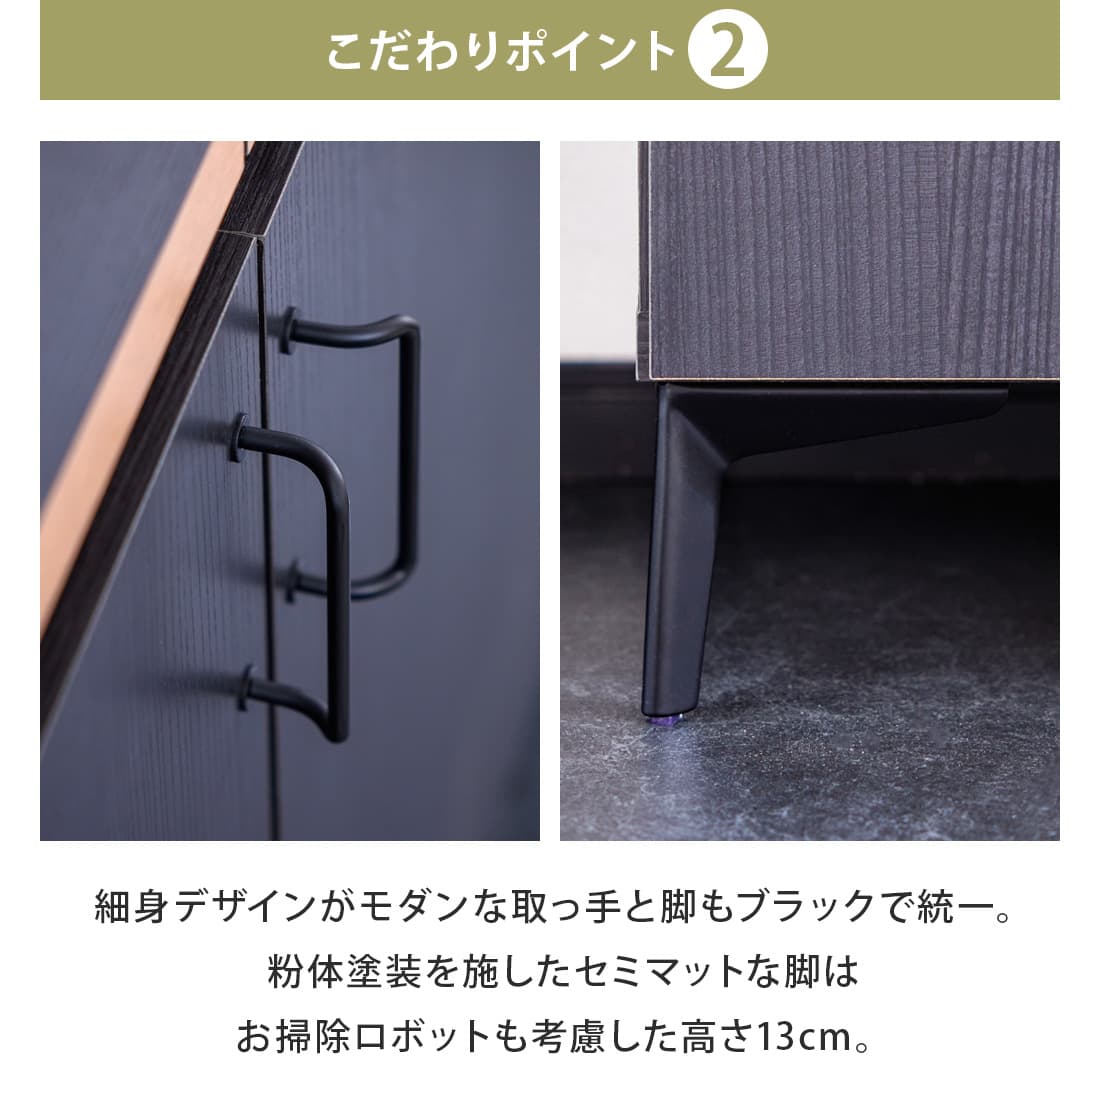 NUIT 135cm ニュイ サイドボード – Living & Journey 本店